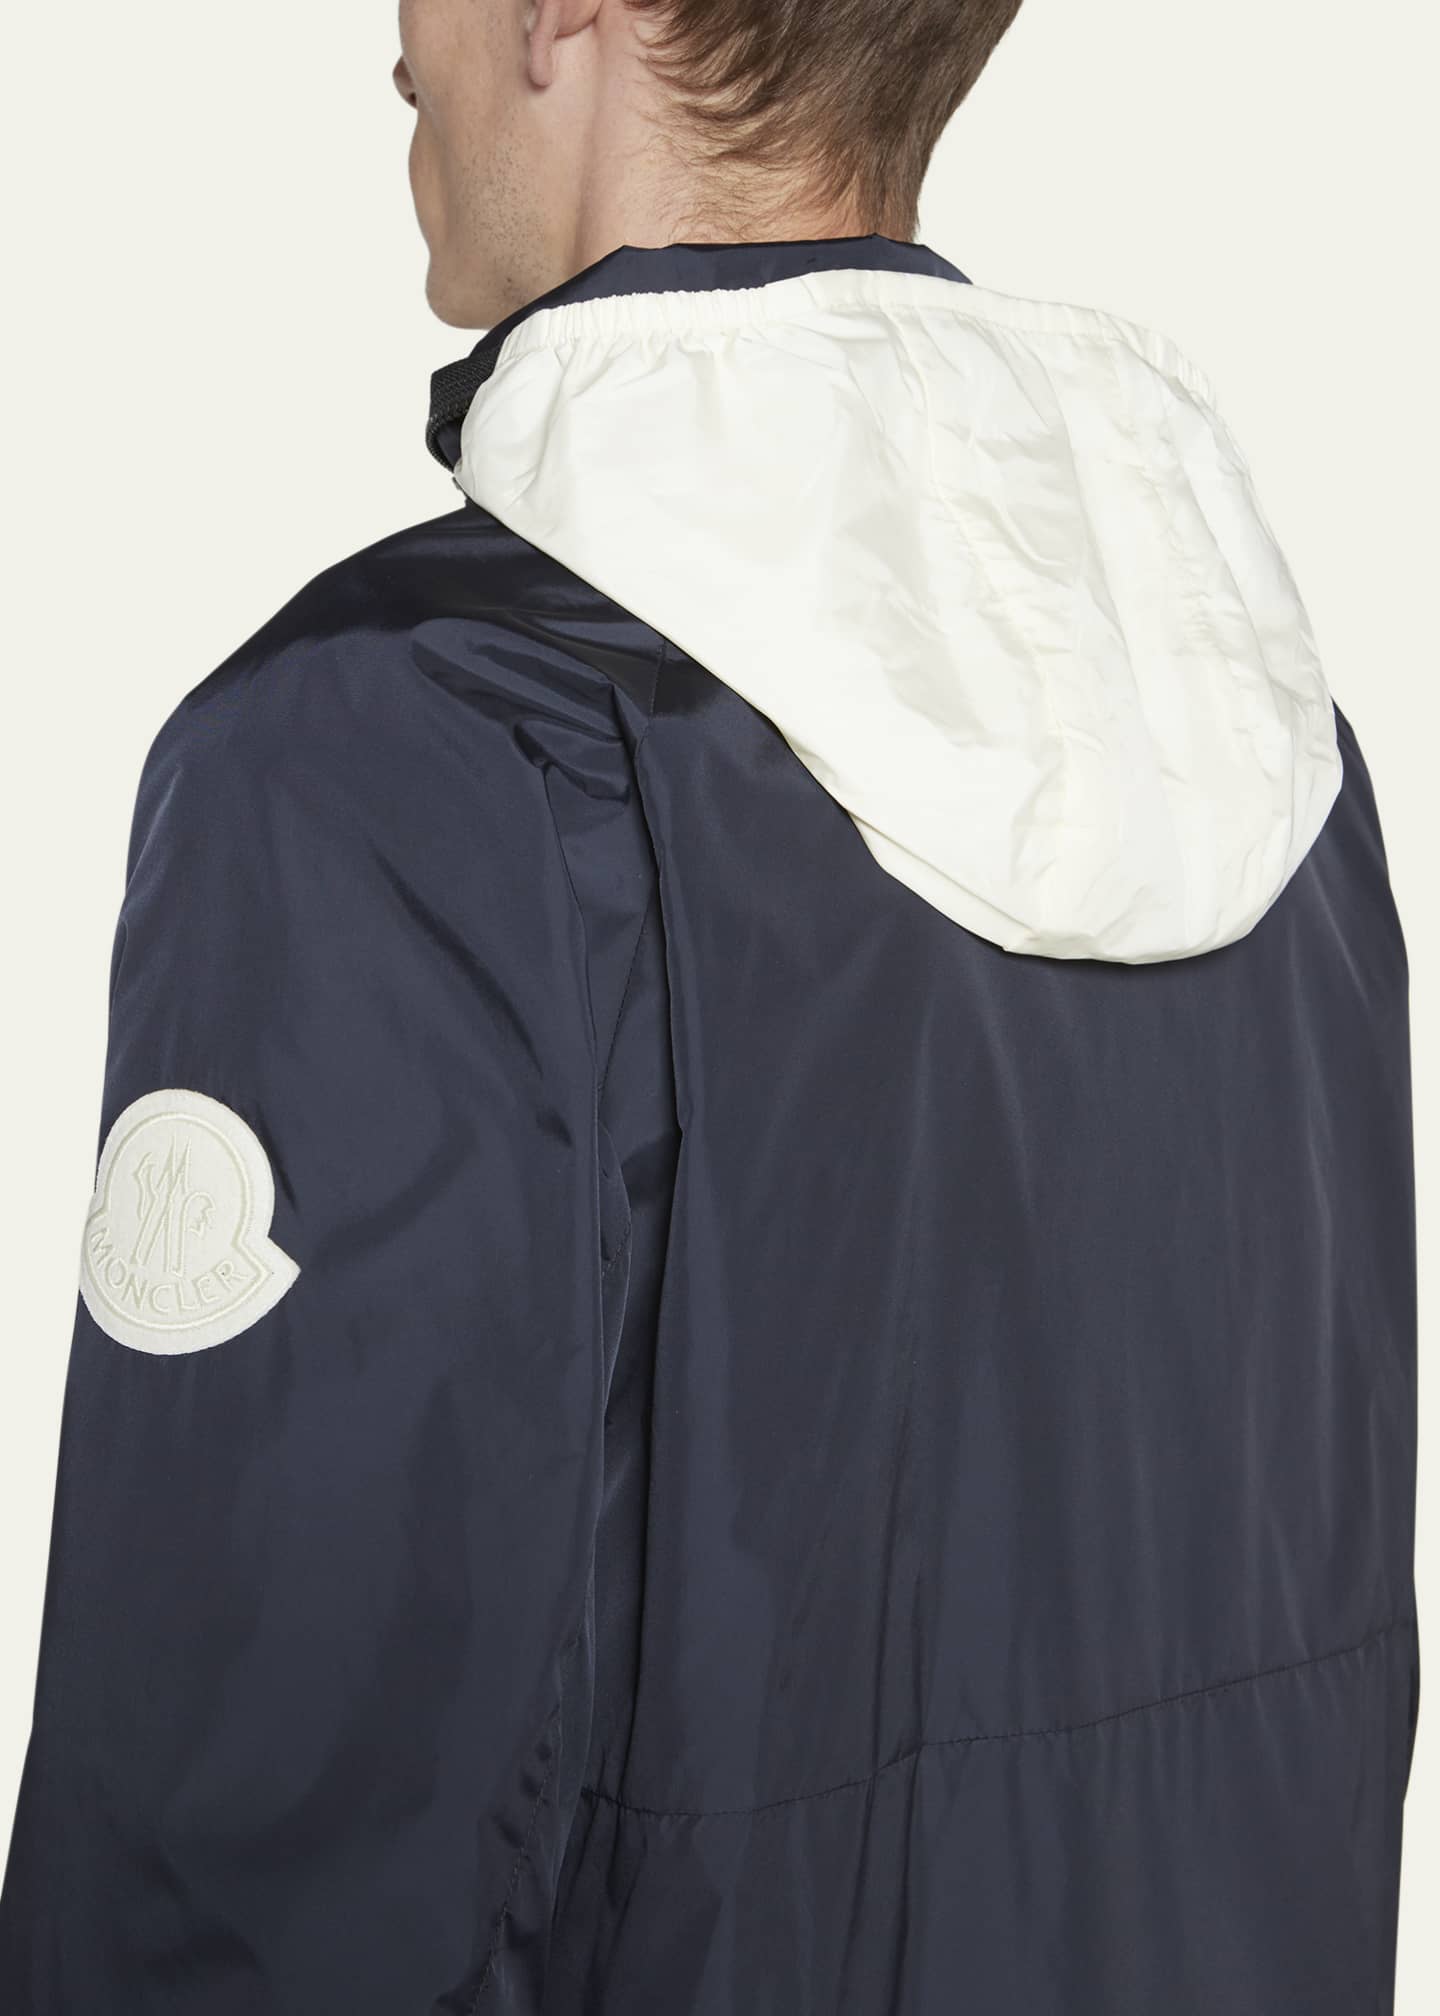 Moncler Men's Octano Jacket